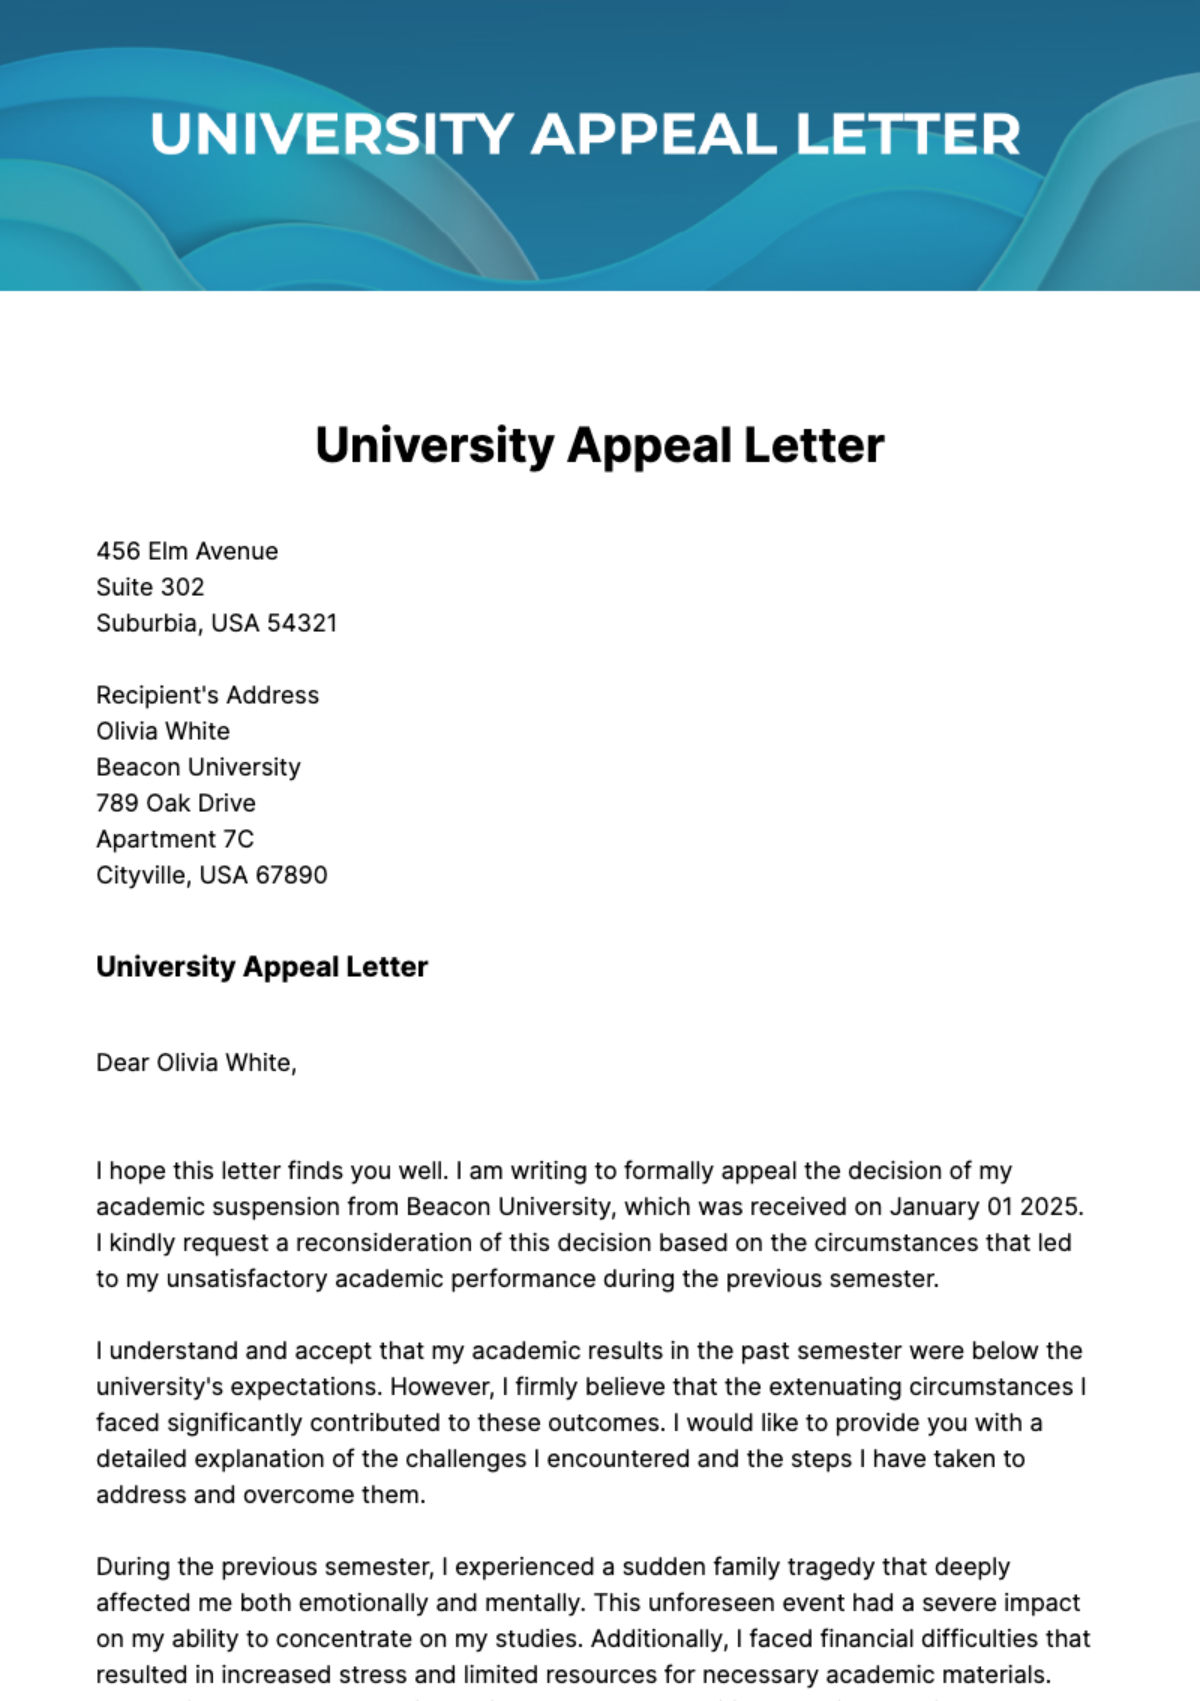 University Appeal Letter Template